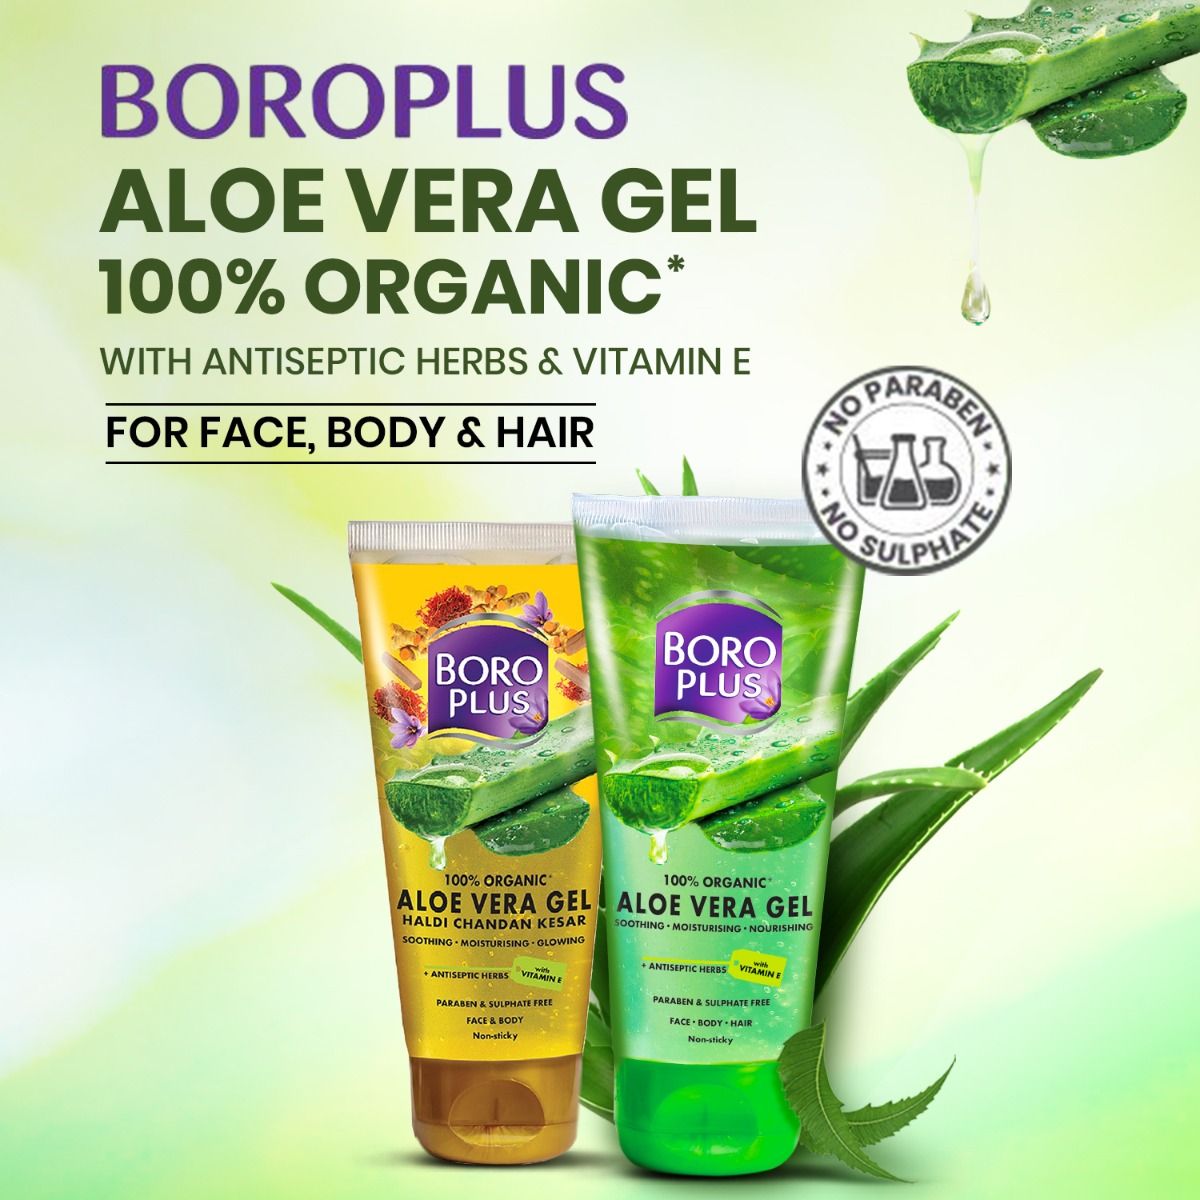 BoroPlus 100% Organic Aloe Vera Gel, 150 ml, Pack of 1 